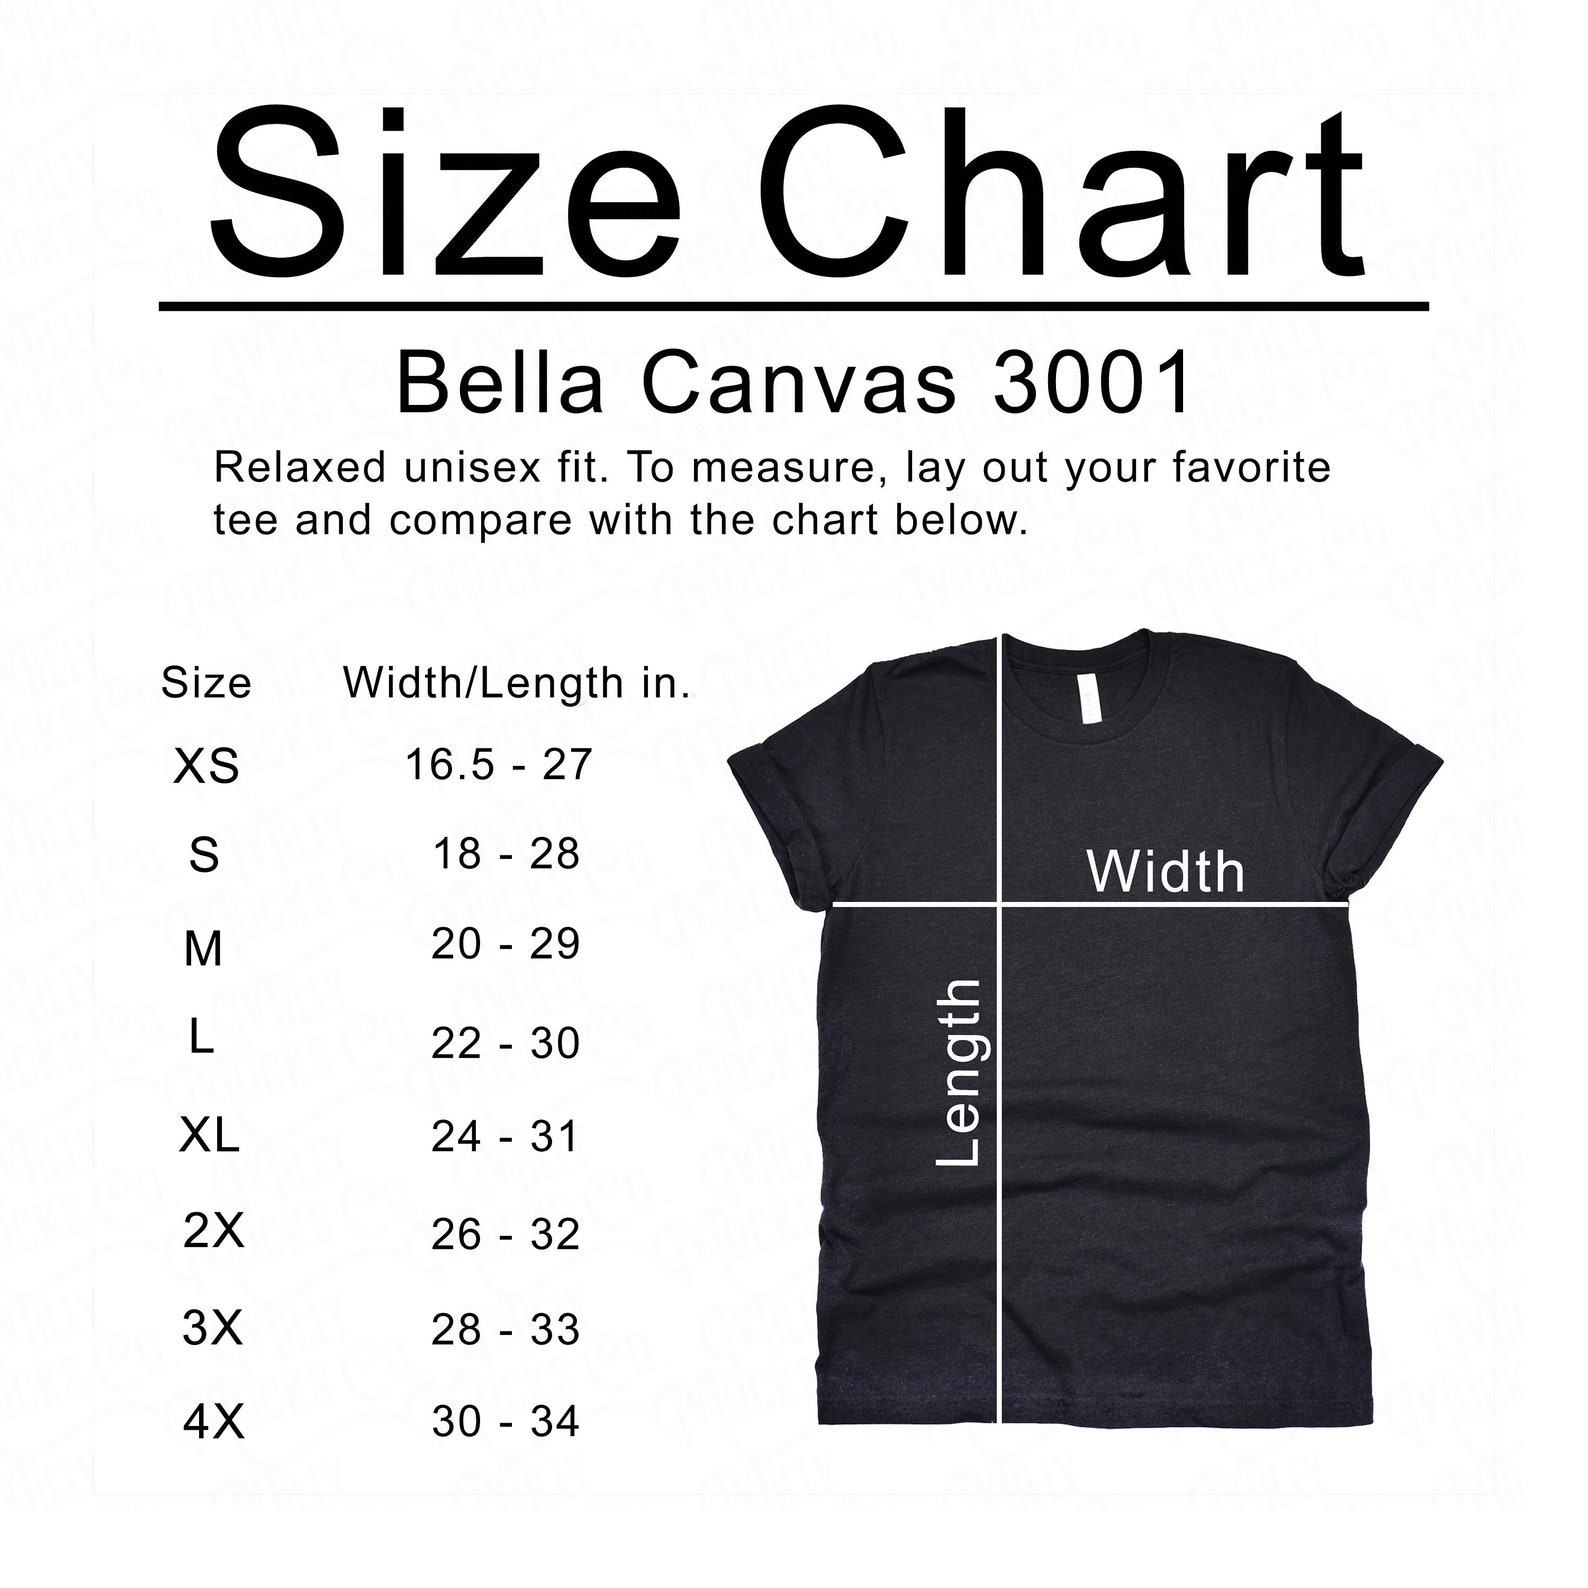 Bella Canvas 3001 Size Chart 3001 Mockup Unisex Size Chart | Etsy